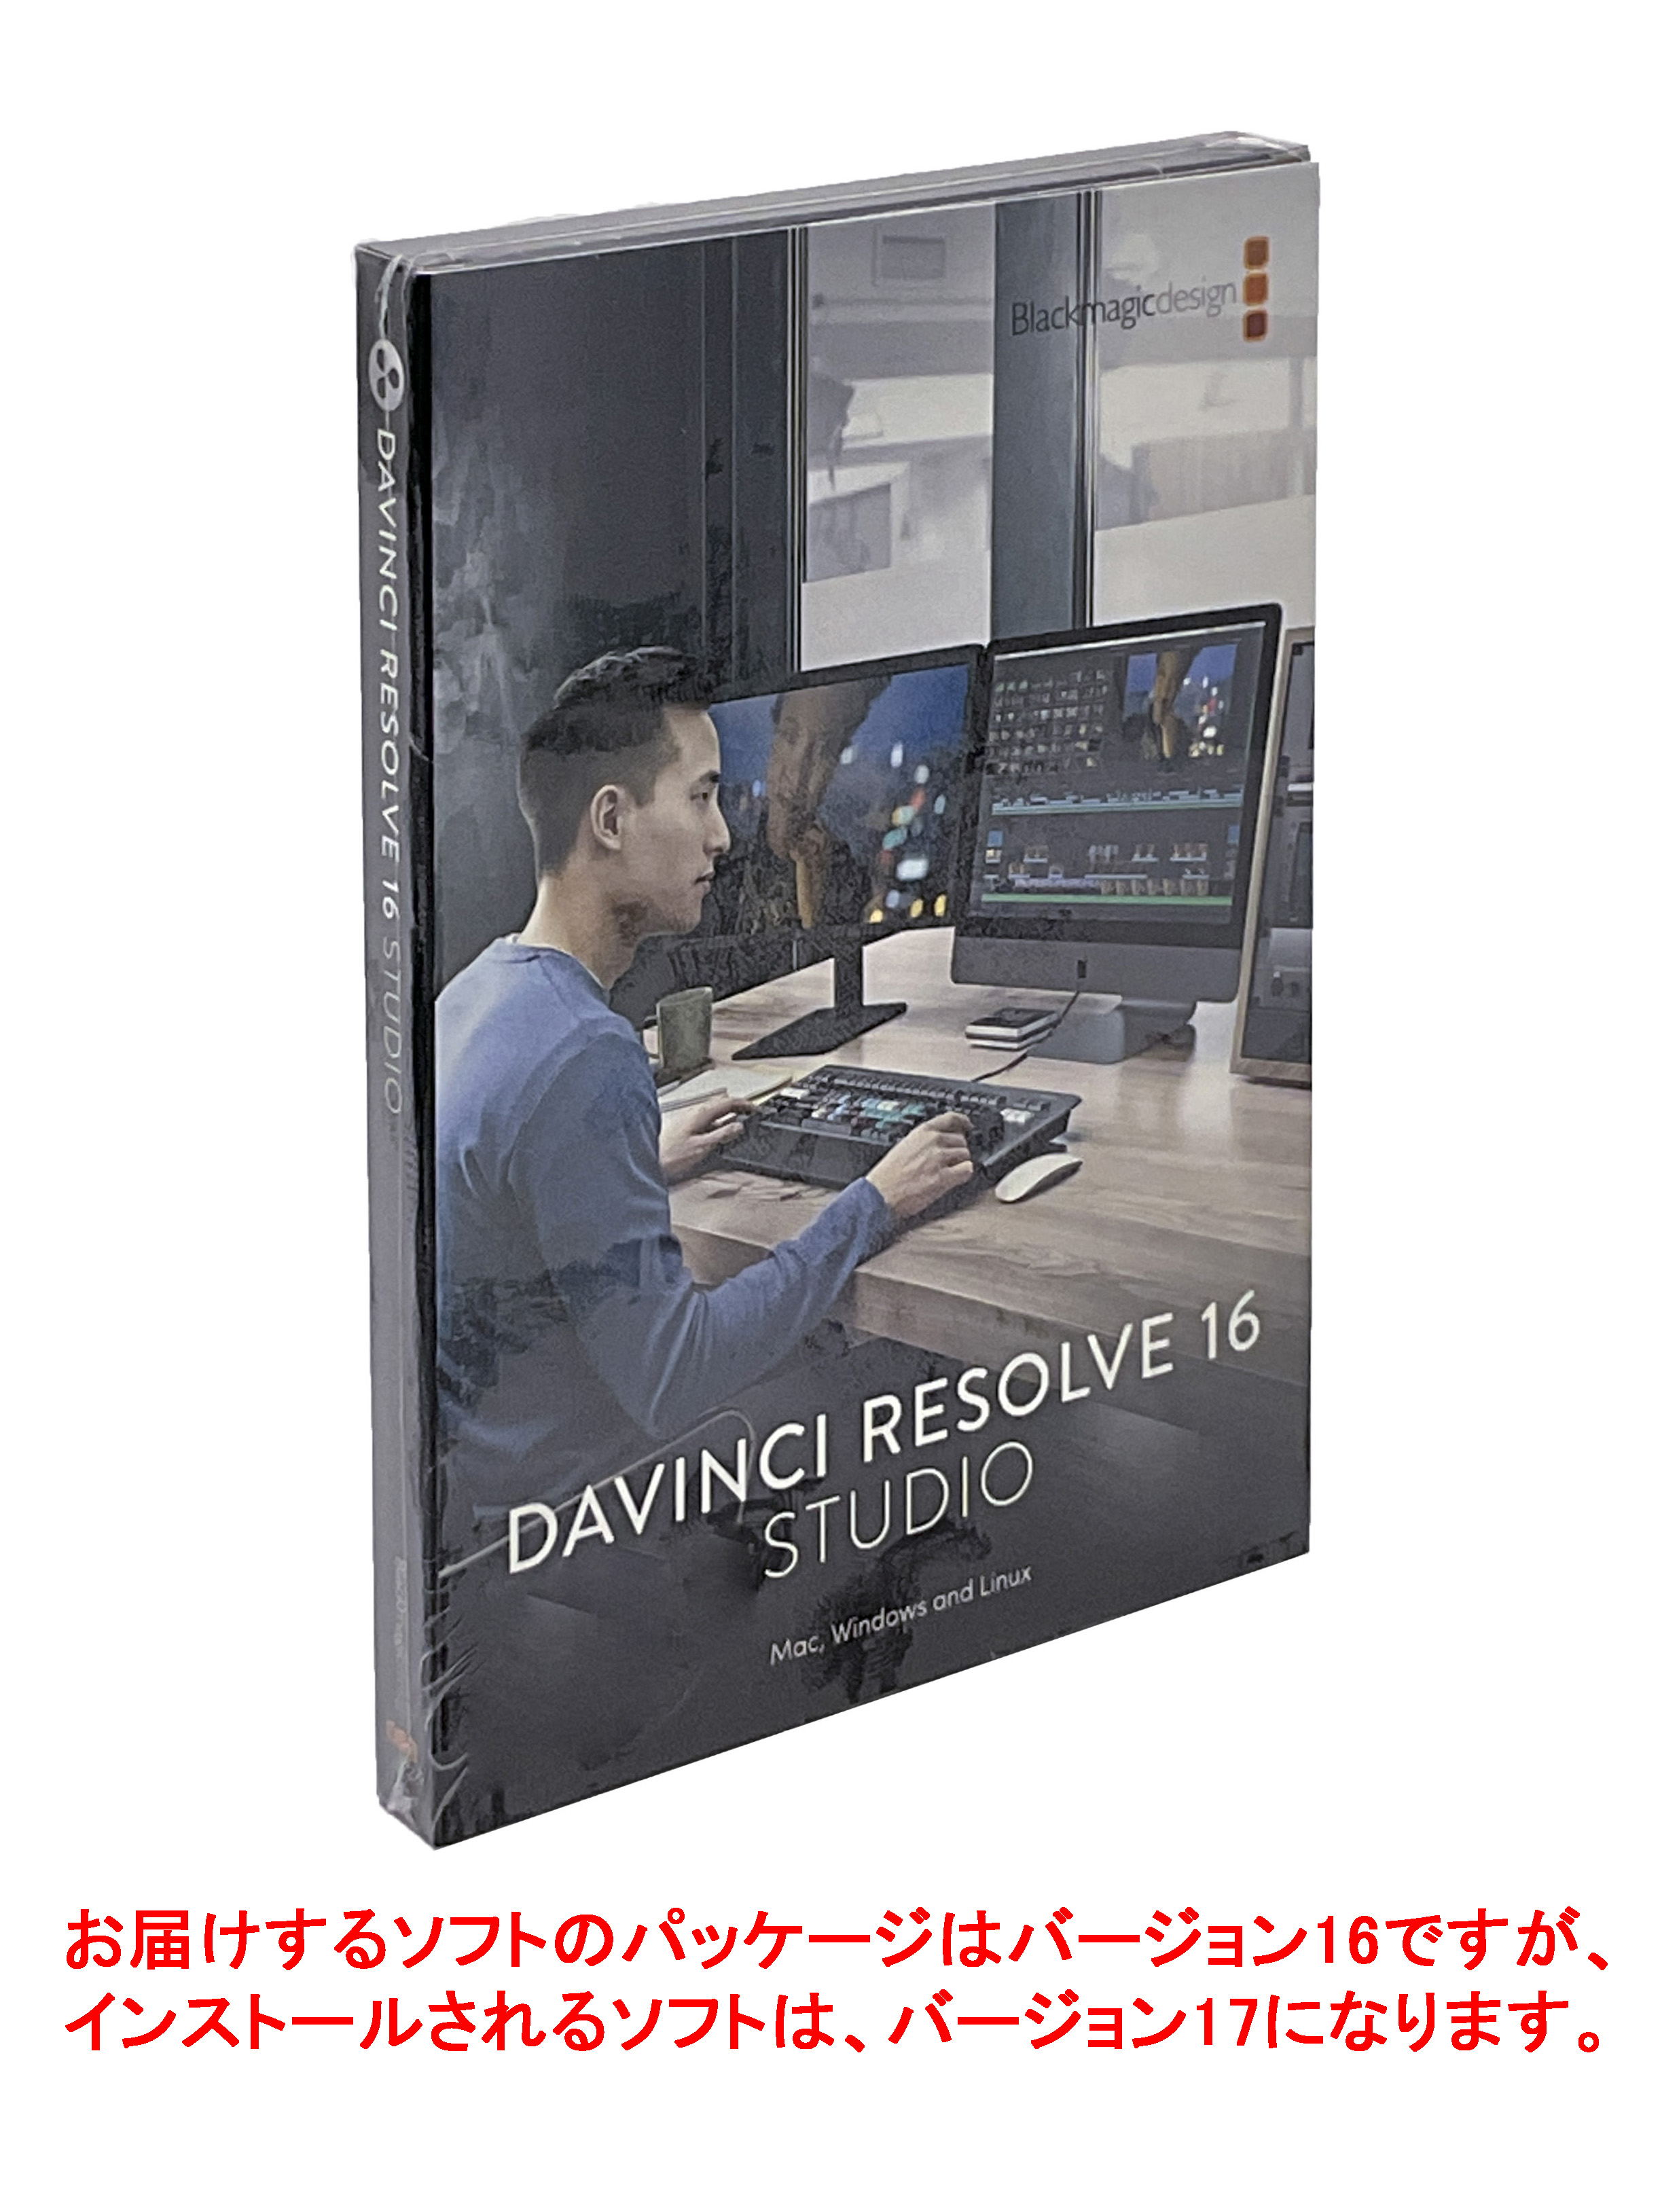 DaVinci Resolve 16 USBドングルカメラ